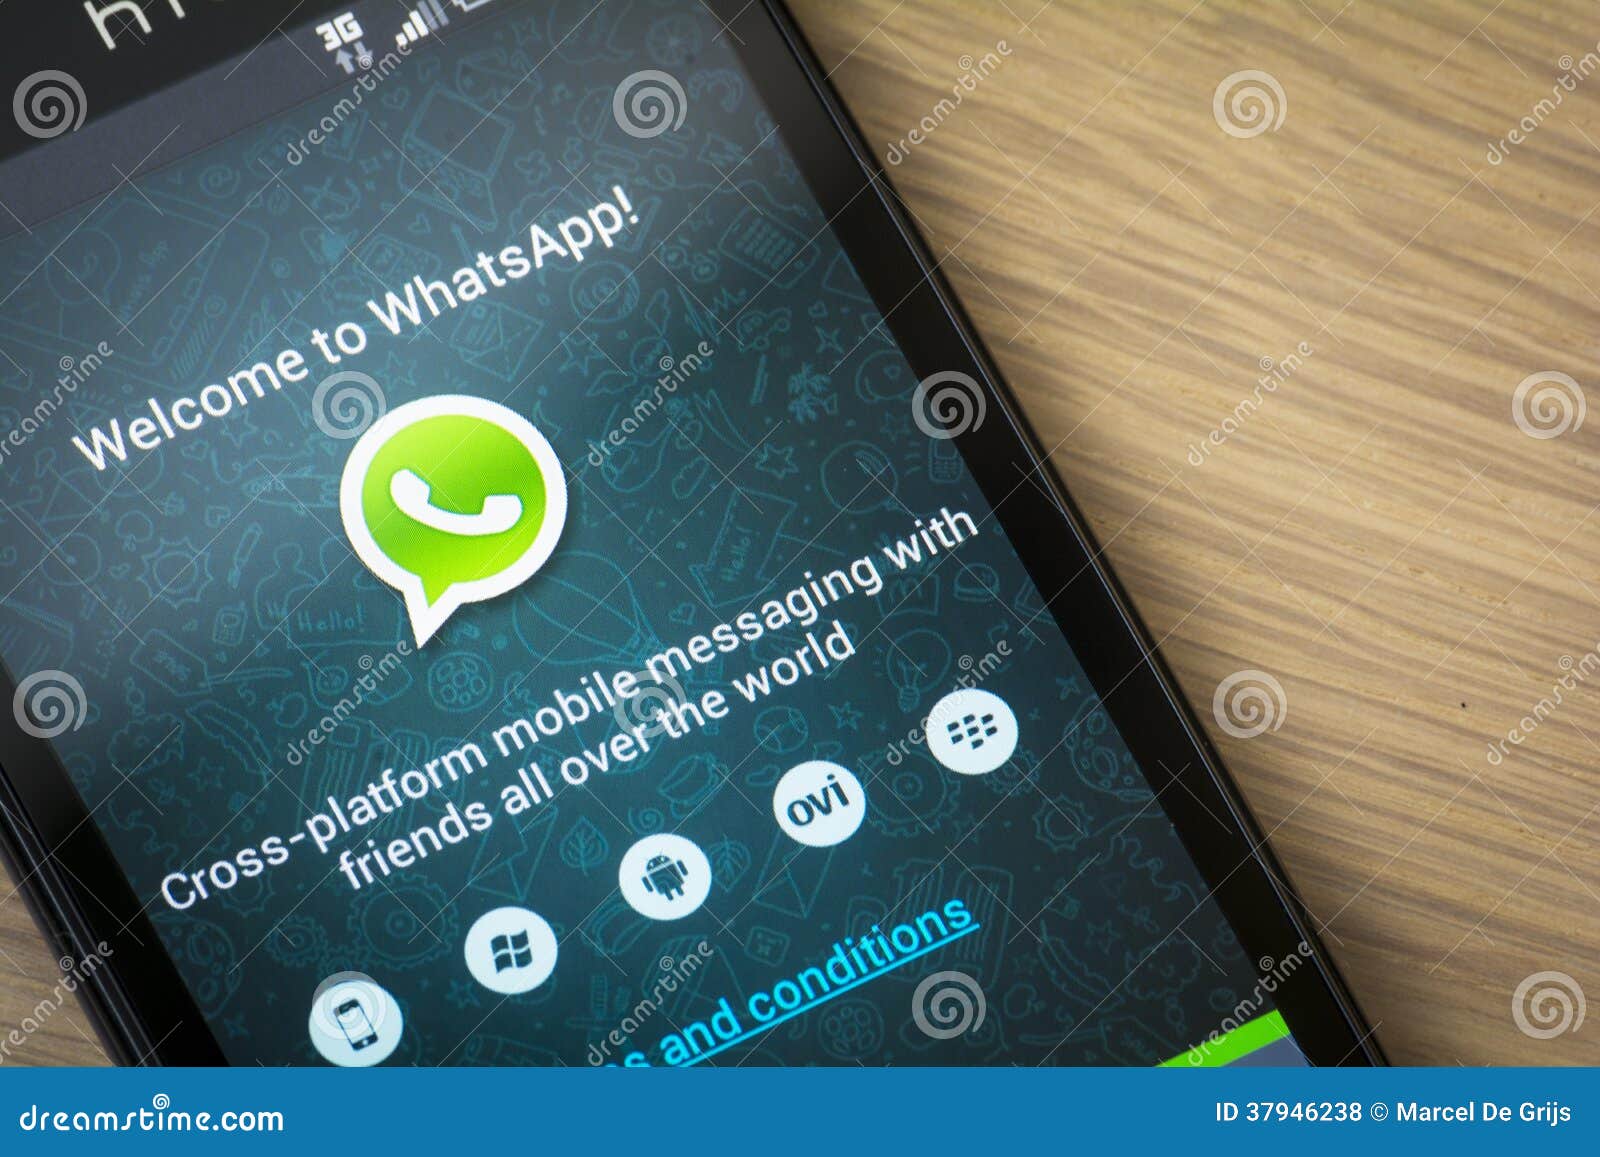 whatsapp mobile application